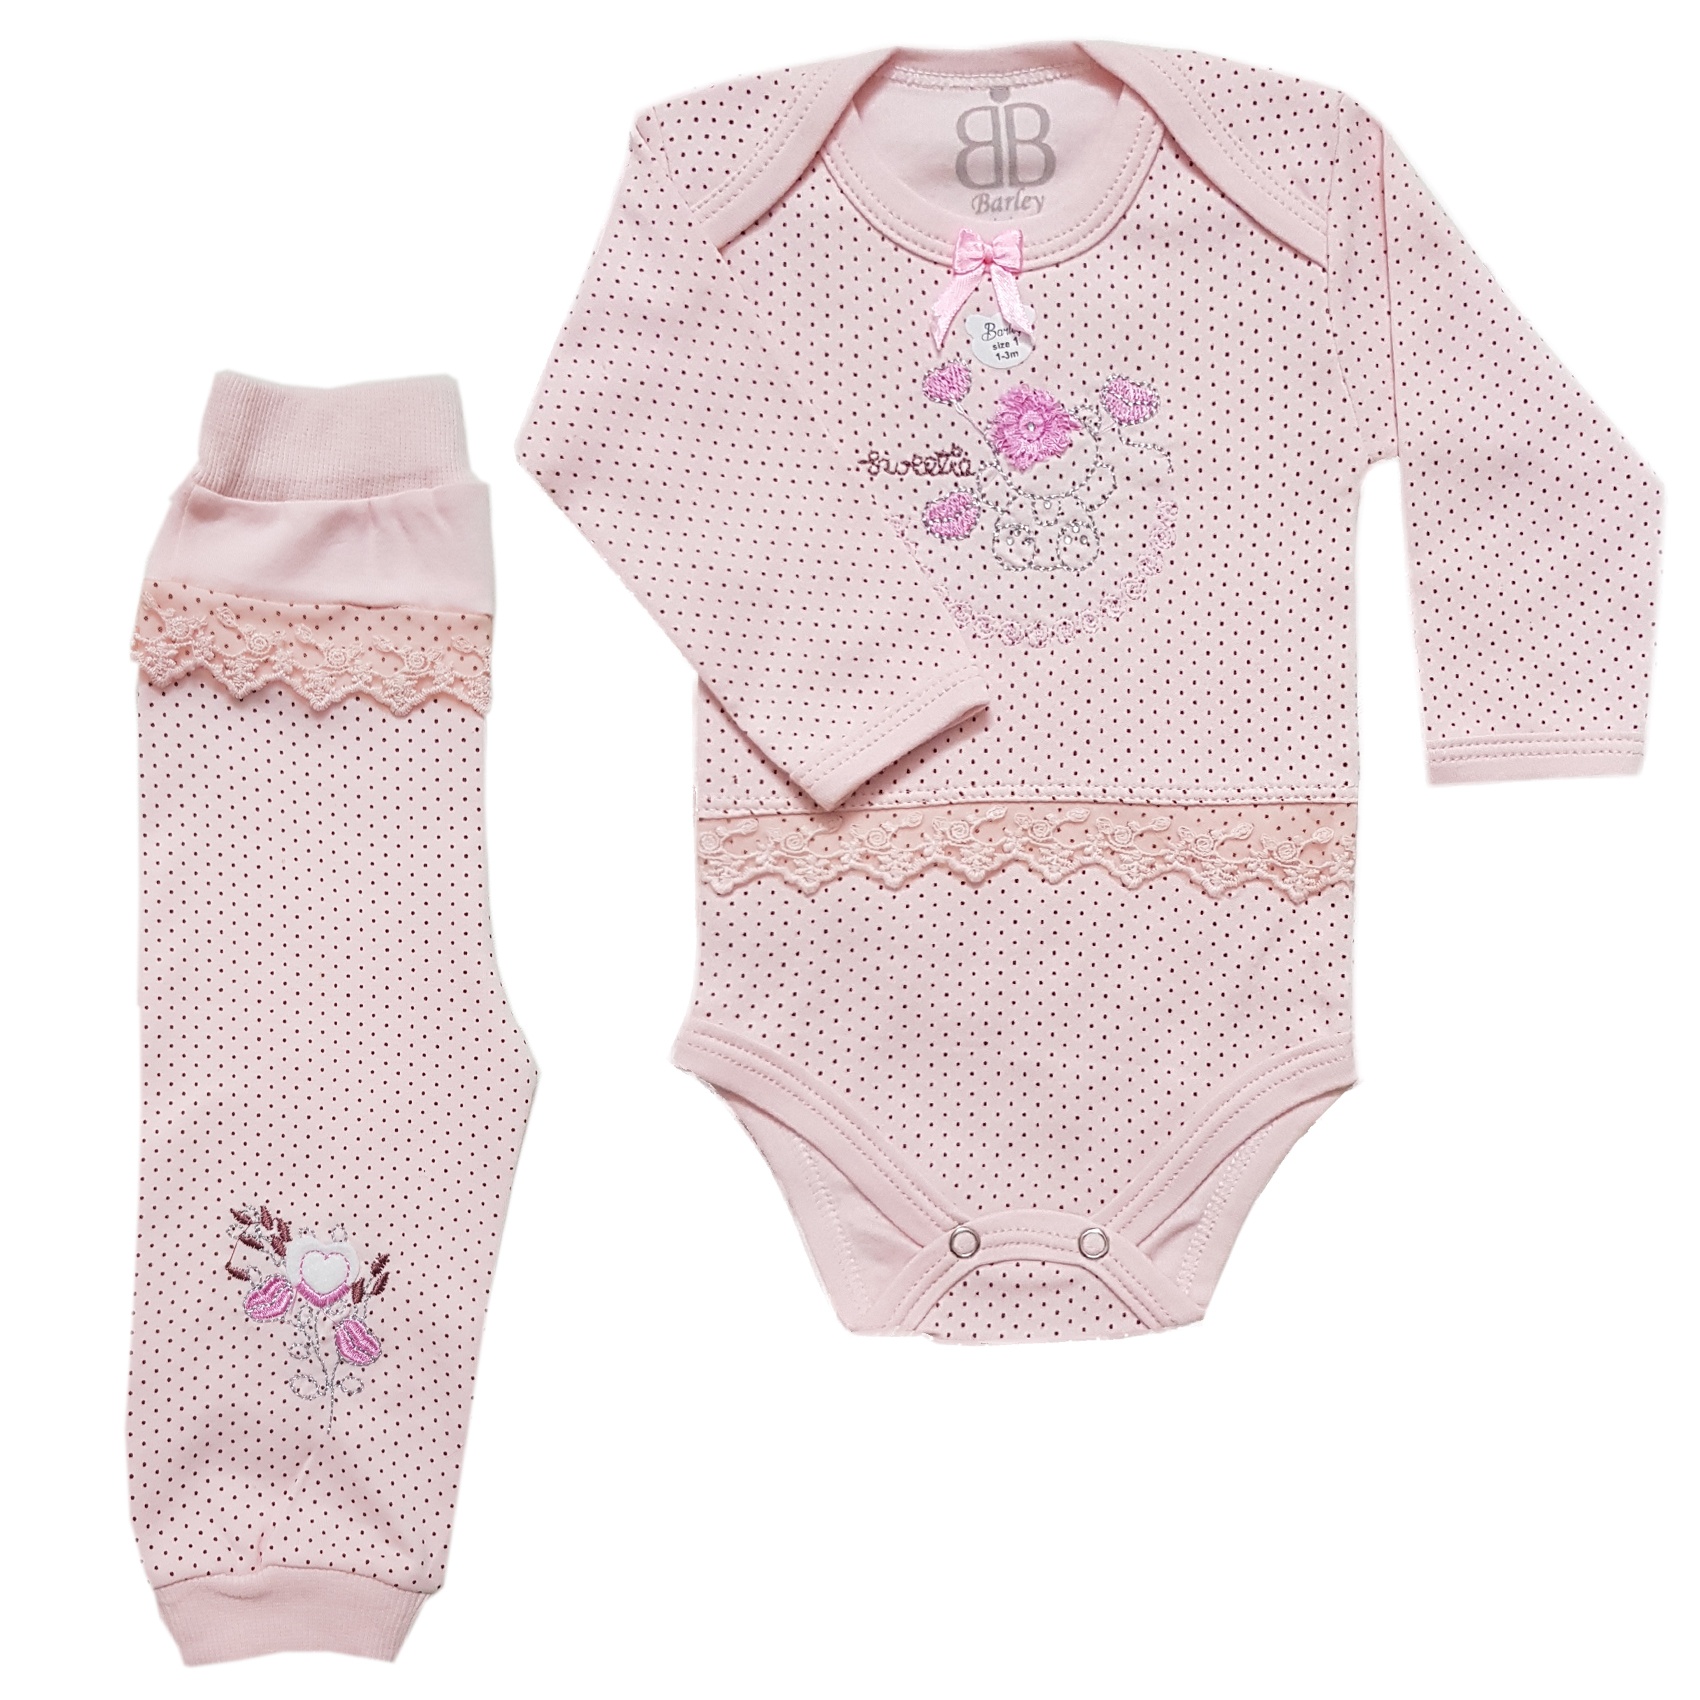 NEWBORN BABY GIRL 2-PIECES BODYSUIT AND PANTS CLOTHING SET, BARLI DESIGN, CODE 001